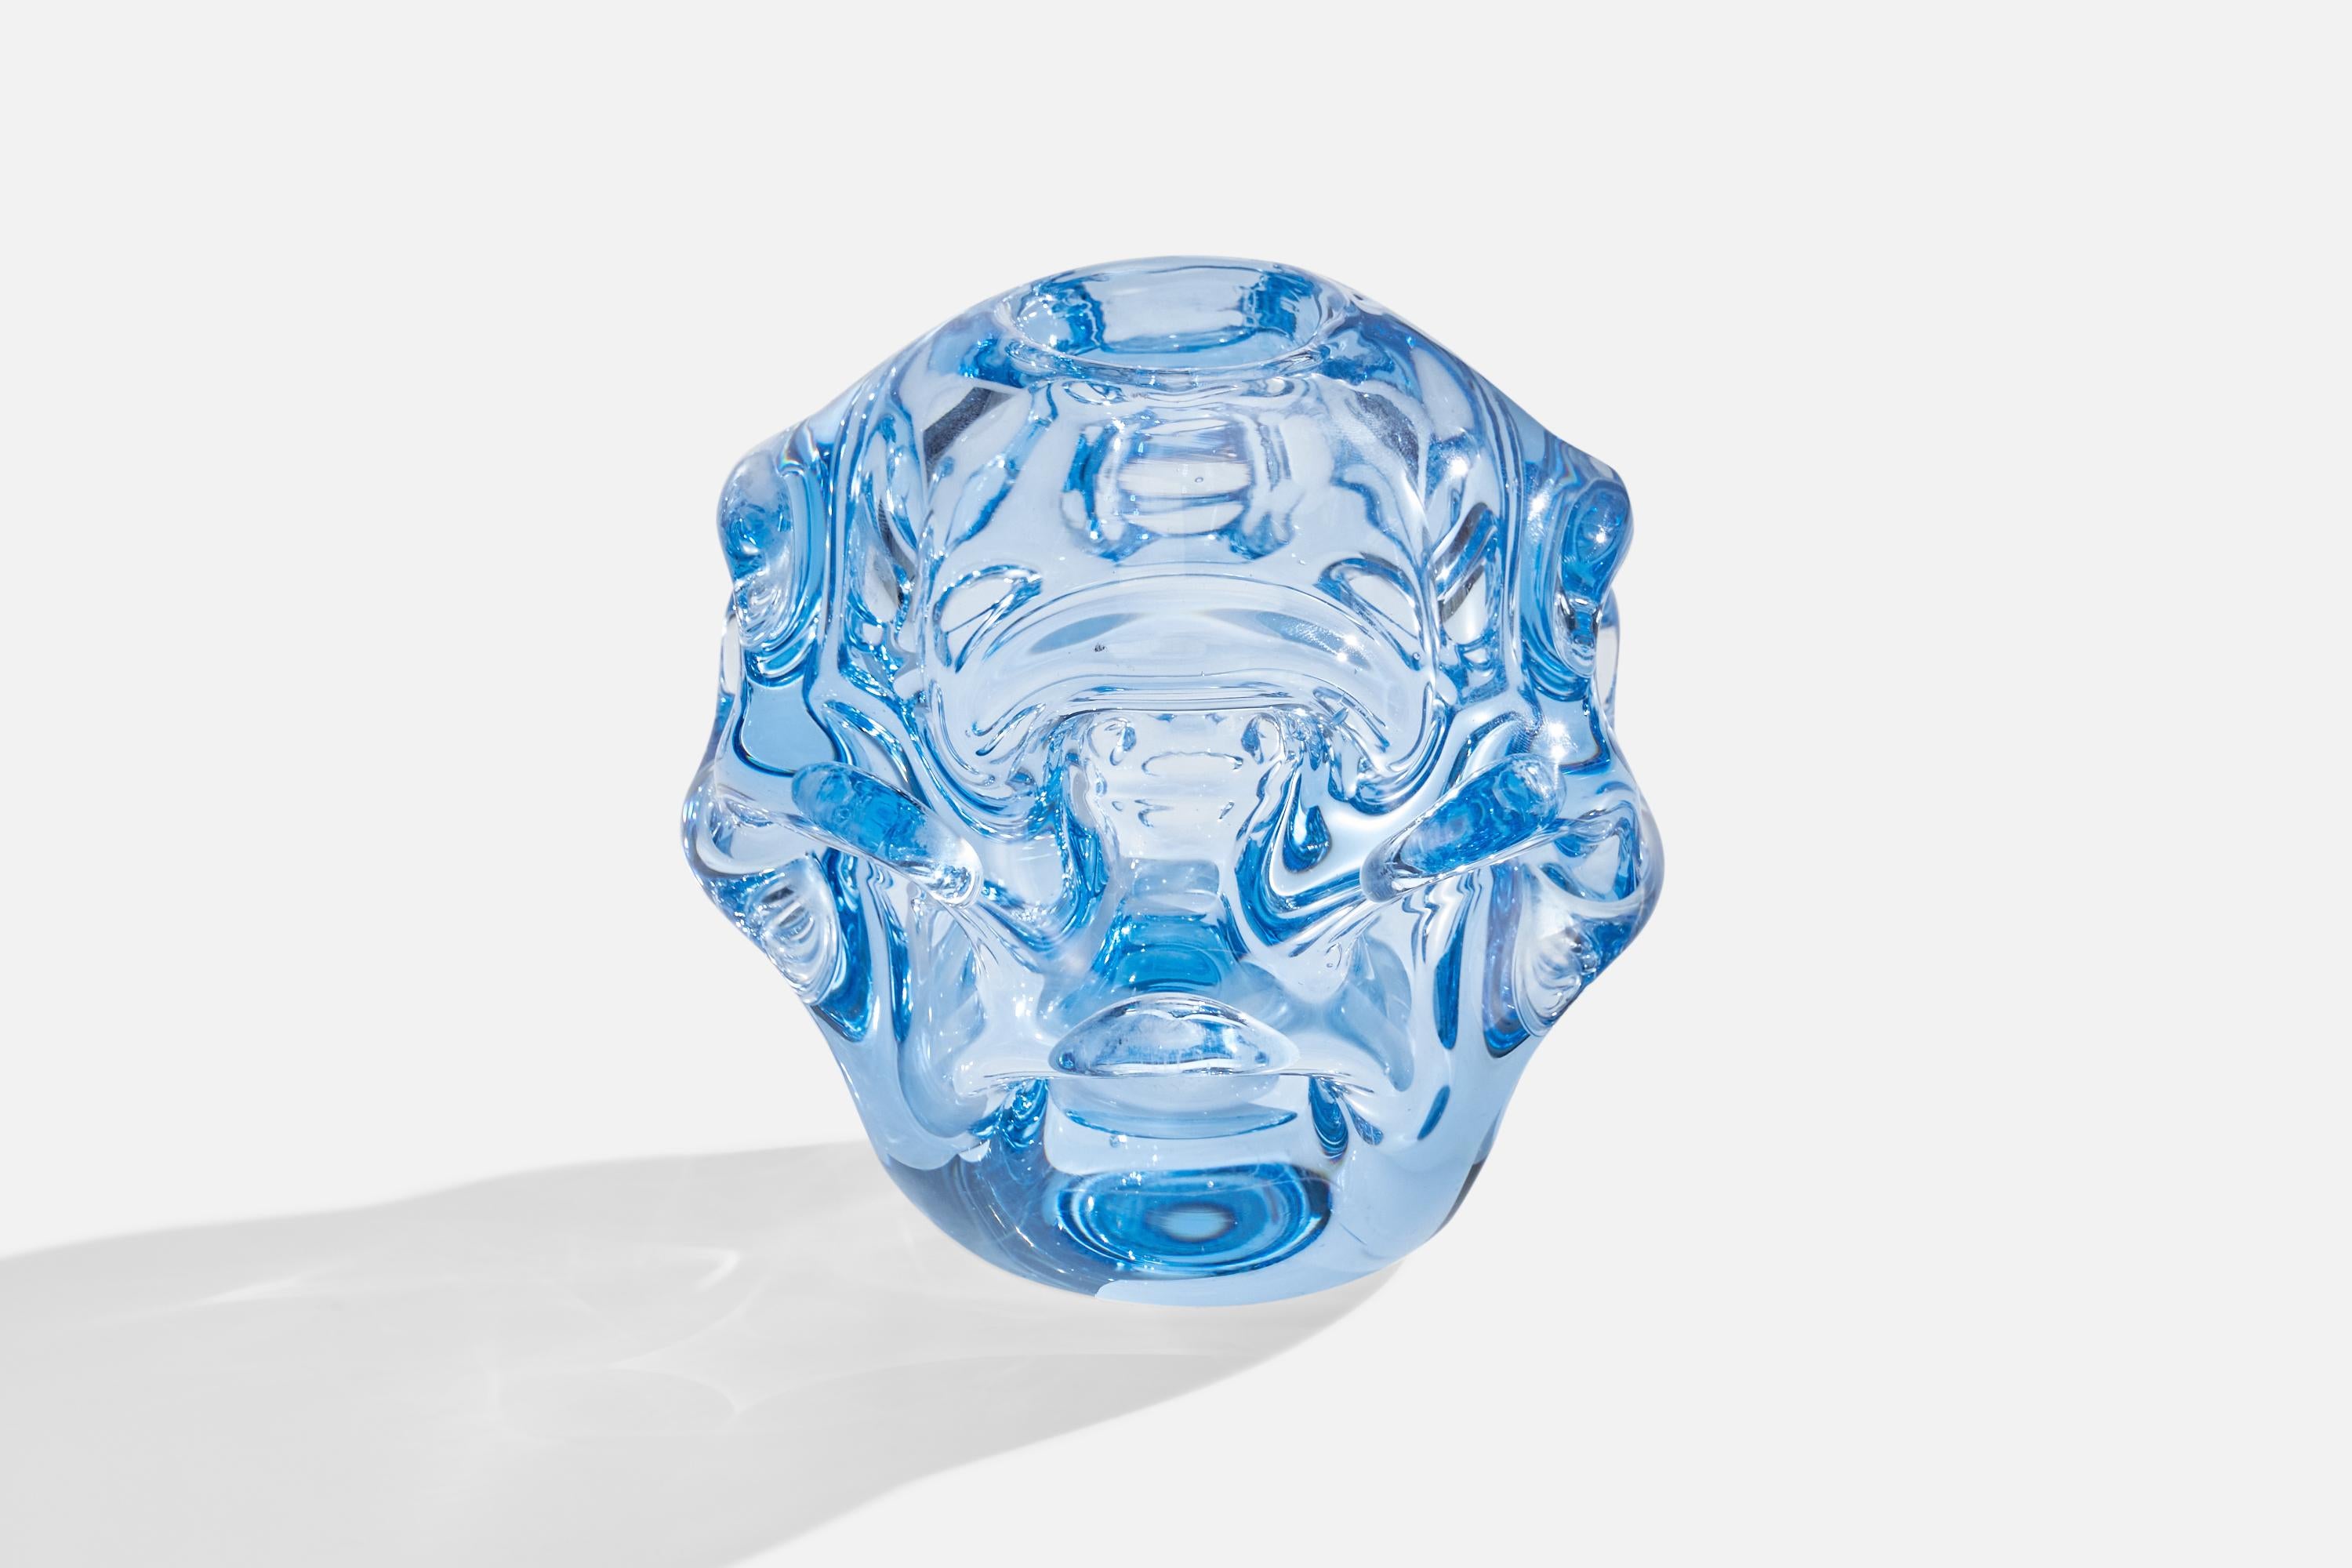 An organic blue blown glass vase designed by Börne Augustsson and produced by Åseda Glasbruk, Sweden, c. 1940s.